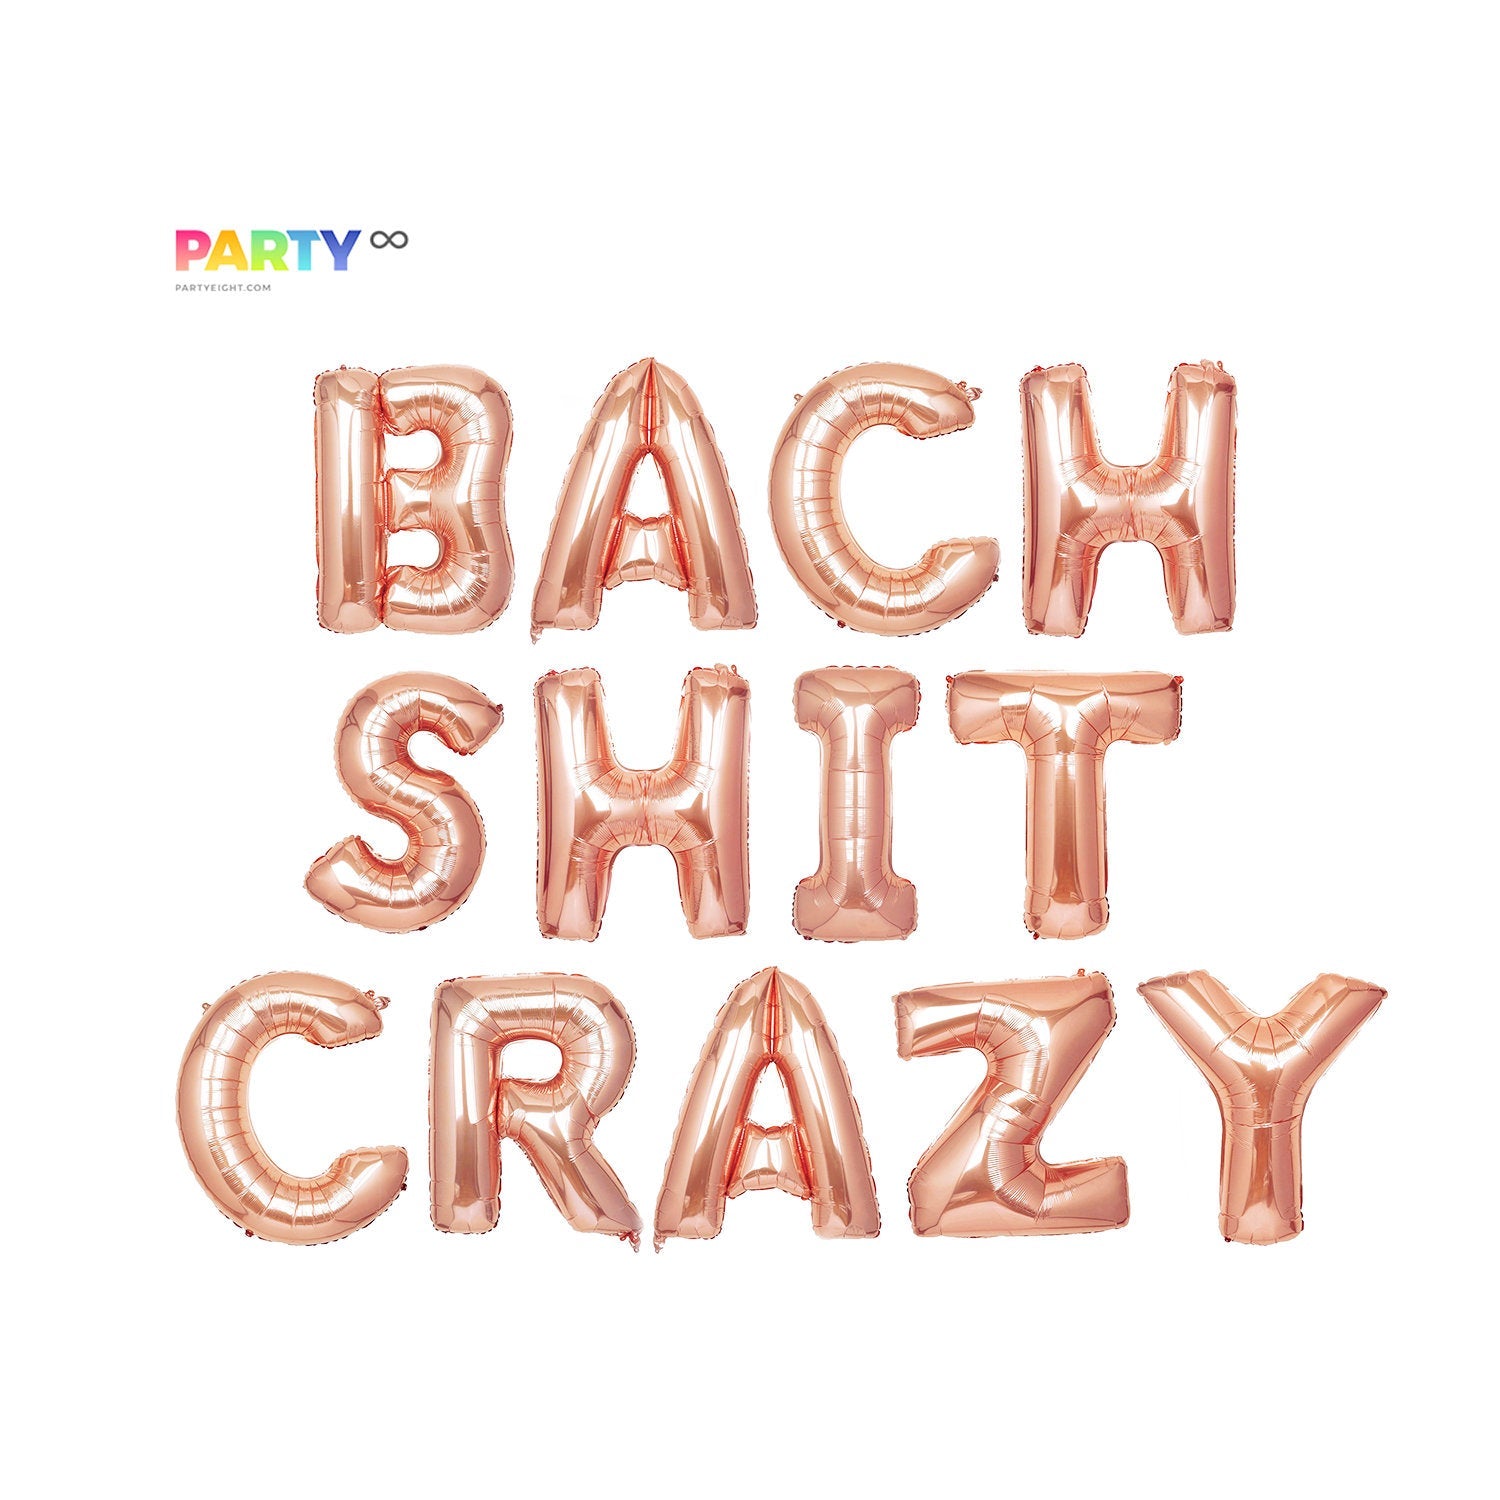 Bach Shit Crazy Banner